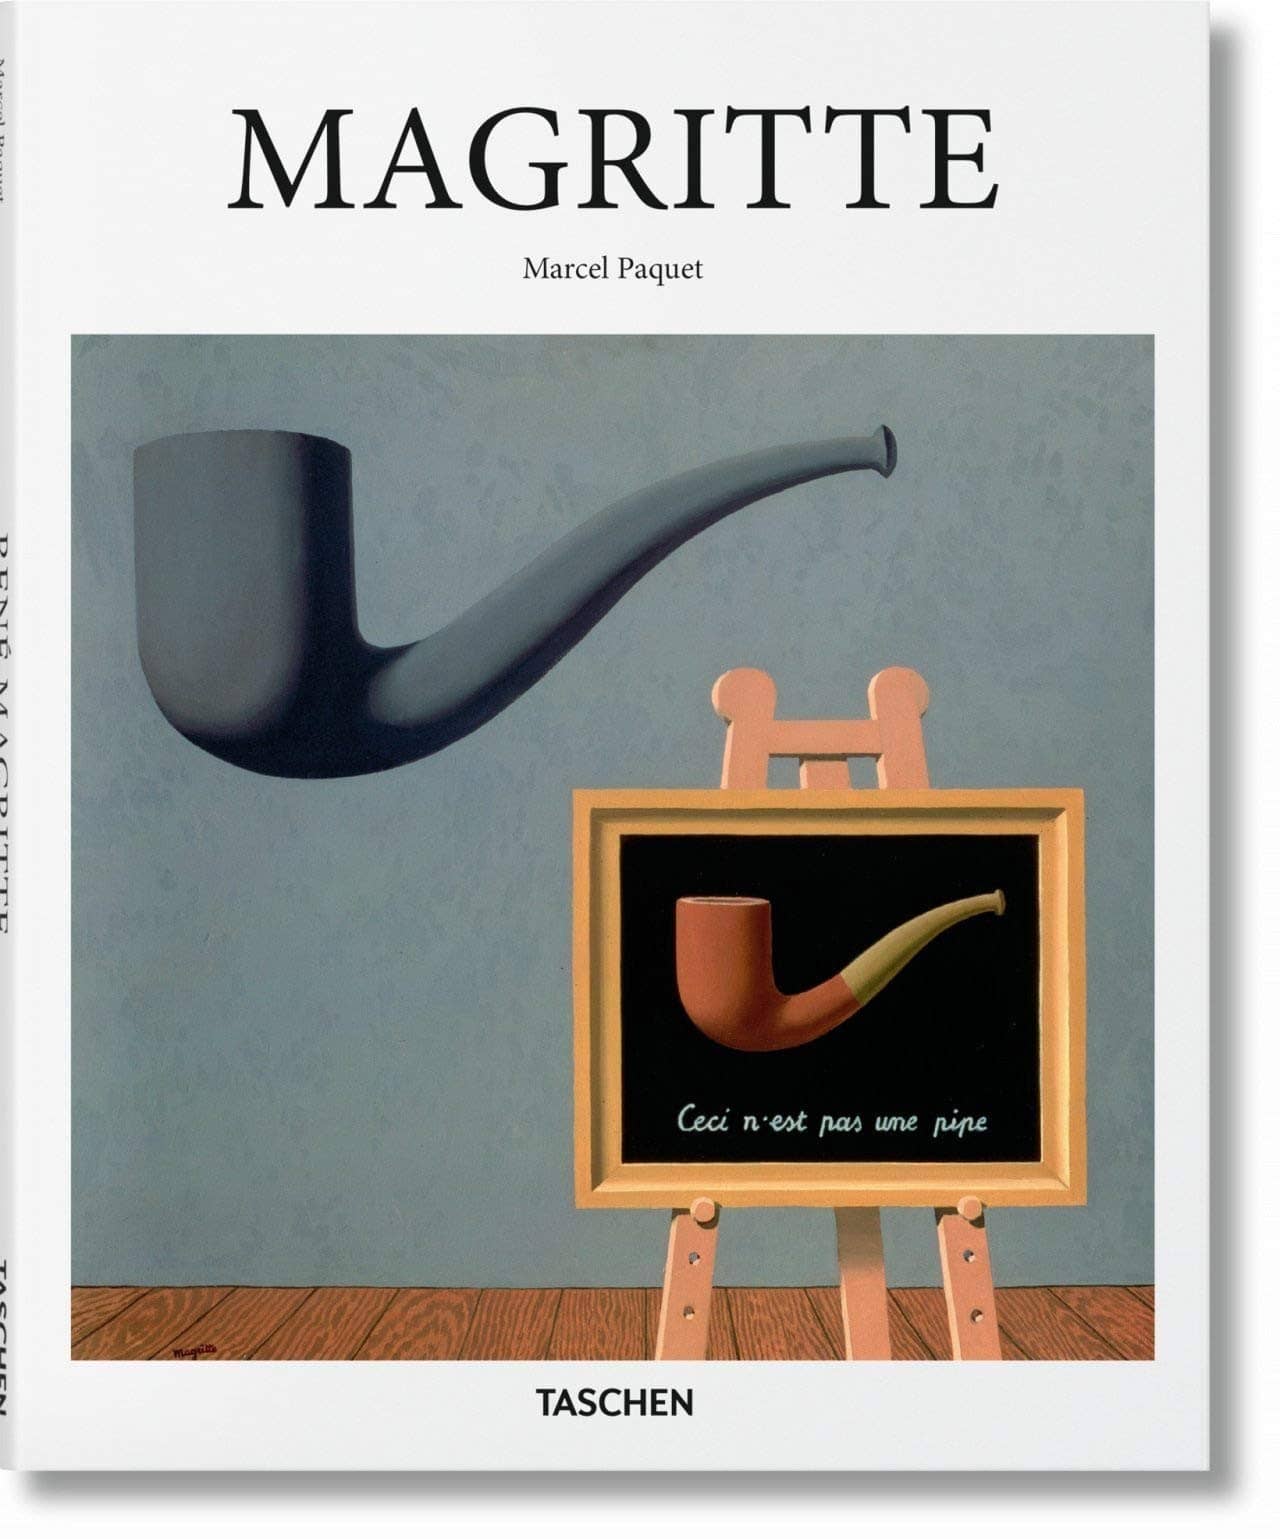 3038-magritte-71j-ccbrhdl-jpg-71j-ccbrhdl